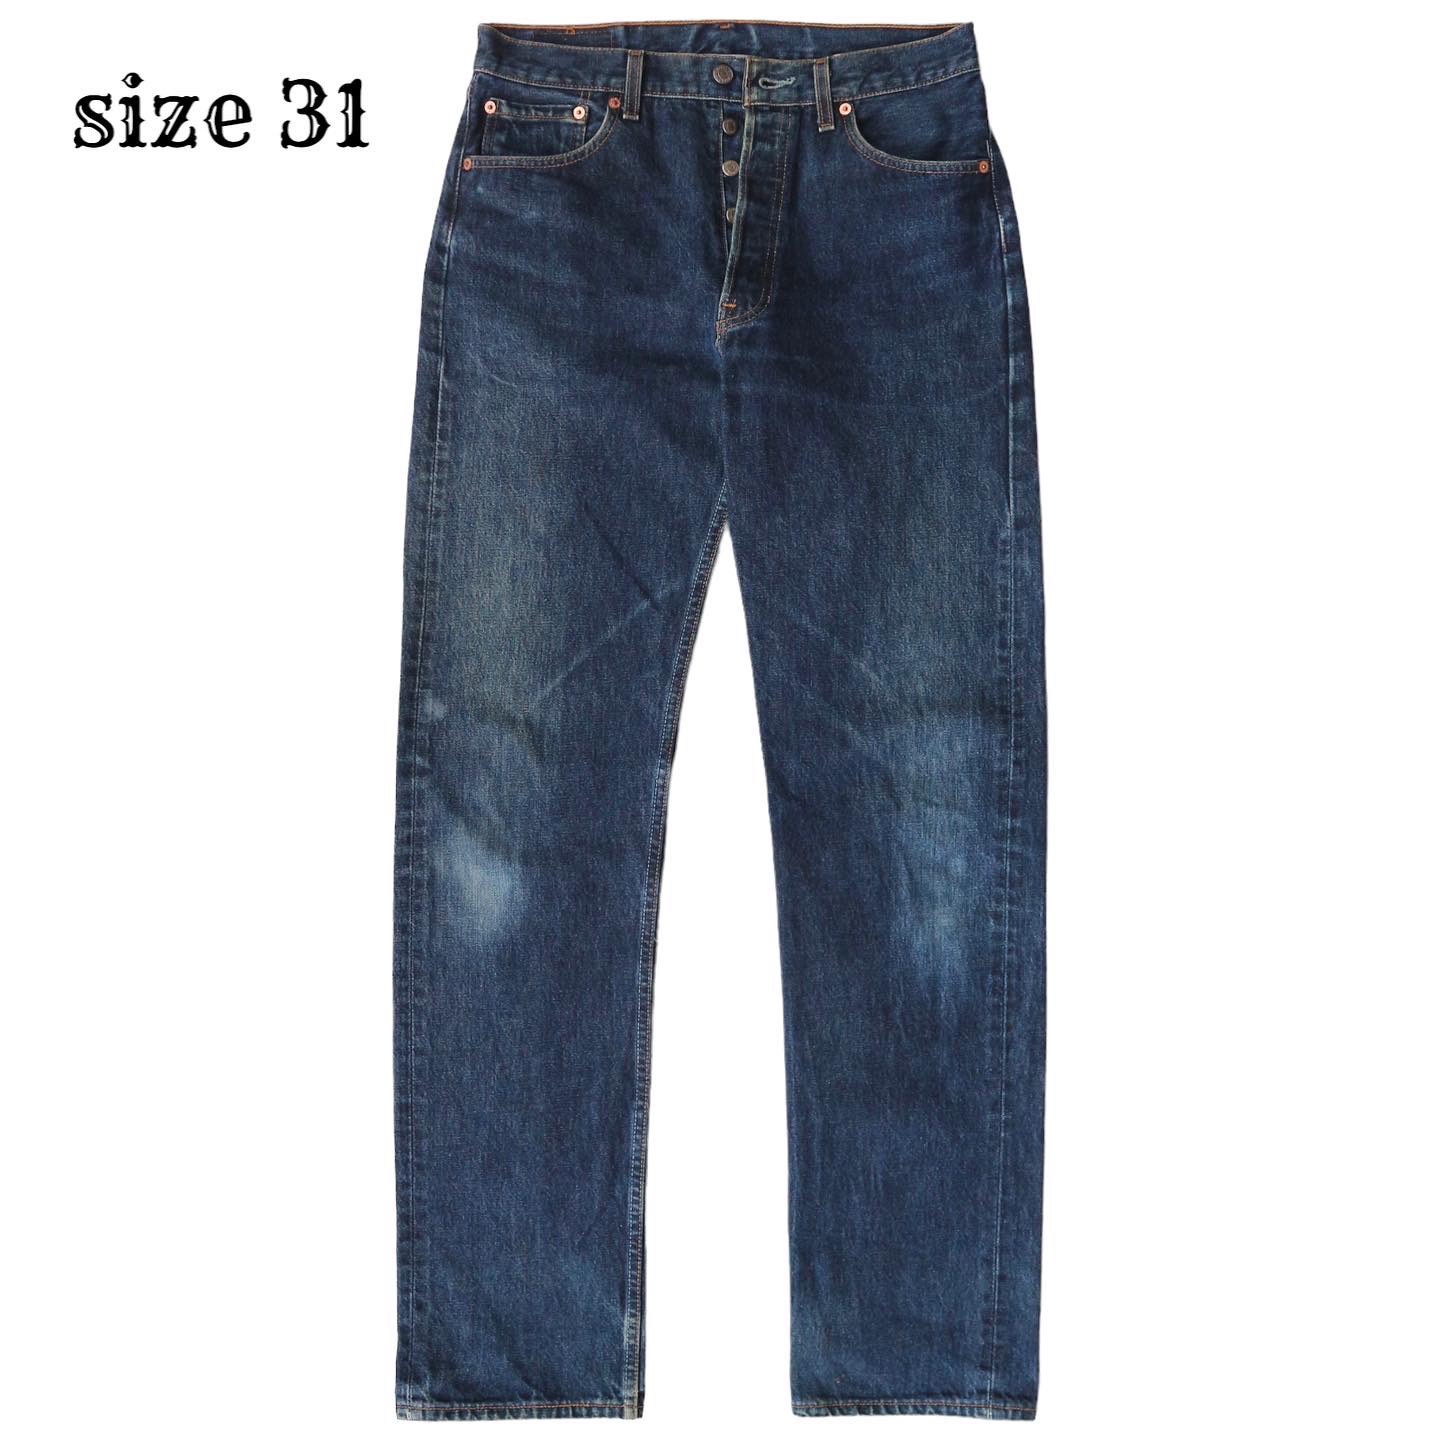 90s Levi's 501 USA Denim Jeans Size 31 denimister